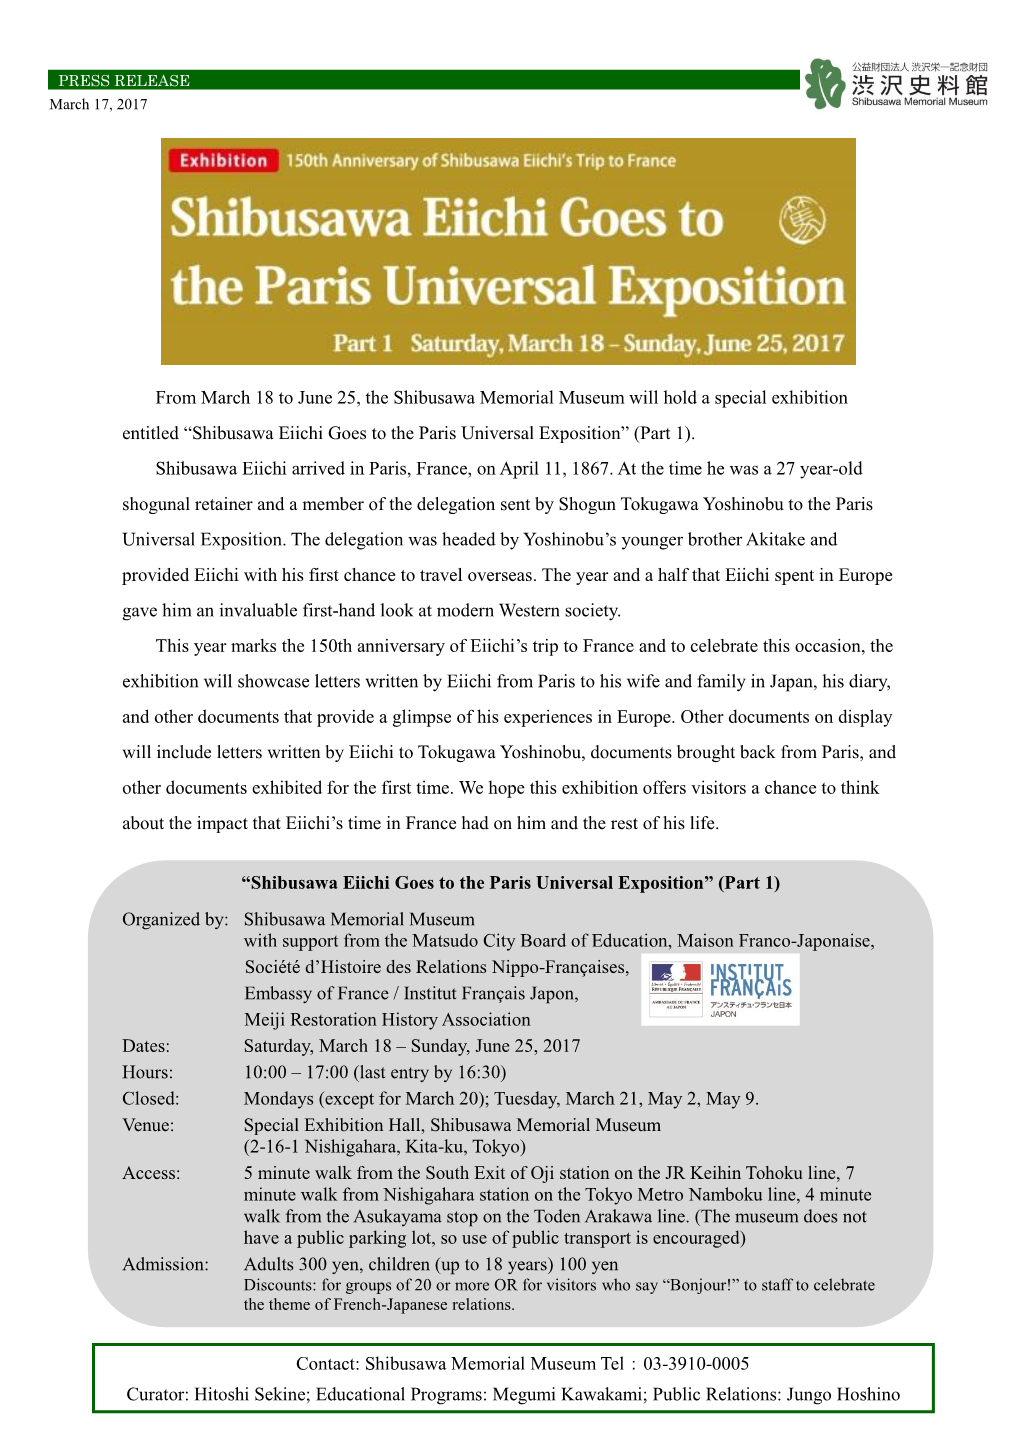 Shibusawa Eiichi Goes to the Paris Universal Exposition” (Part 1)